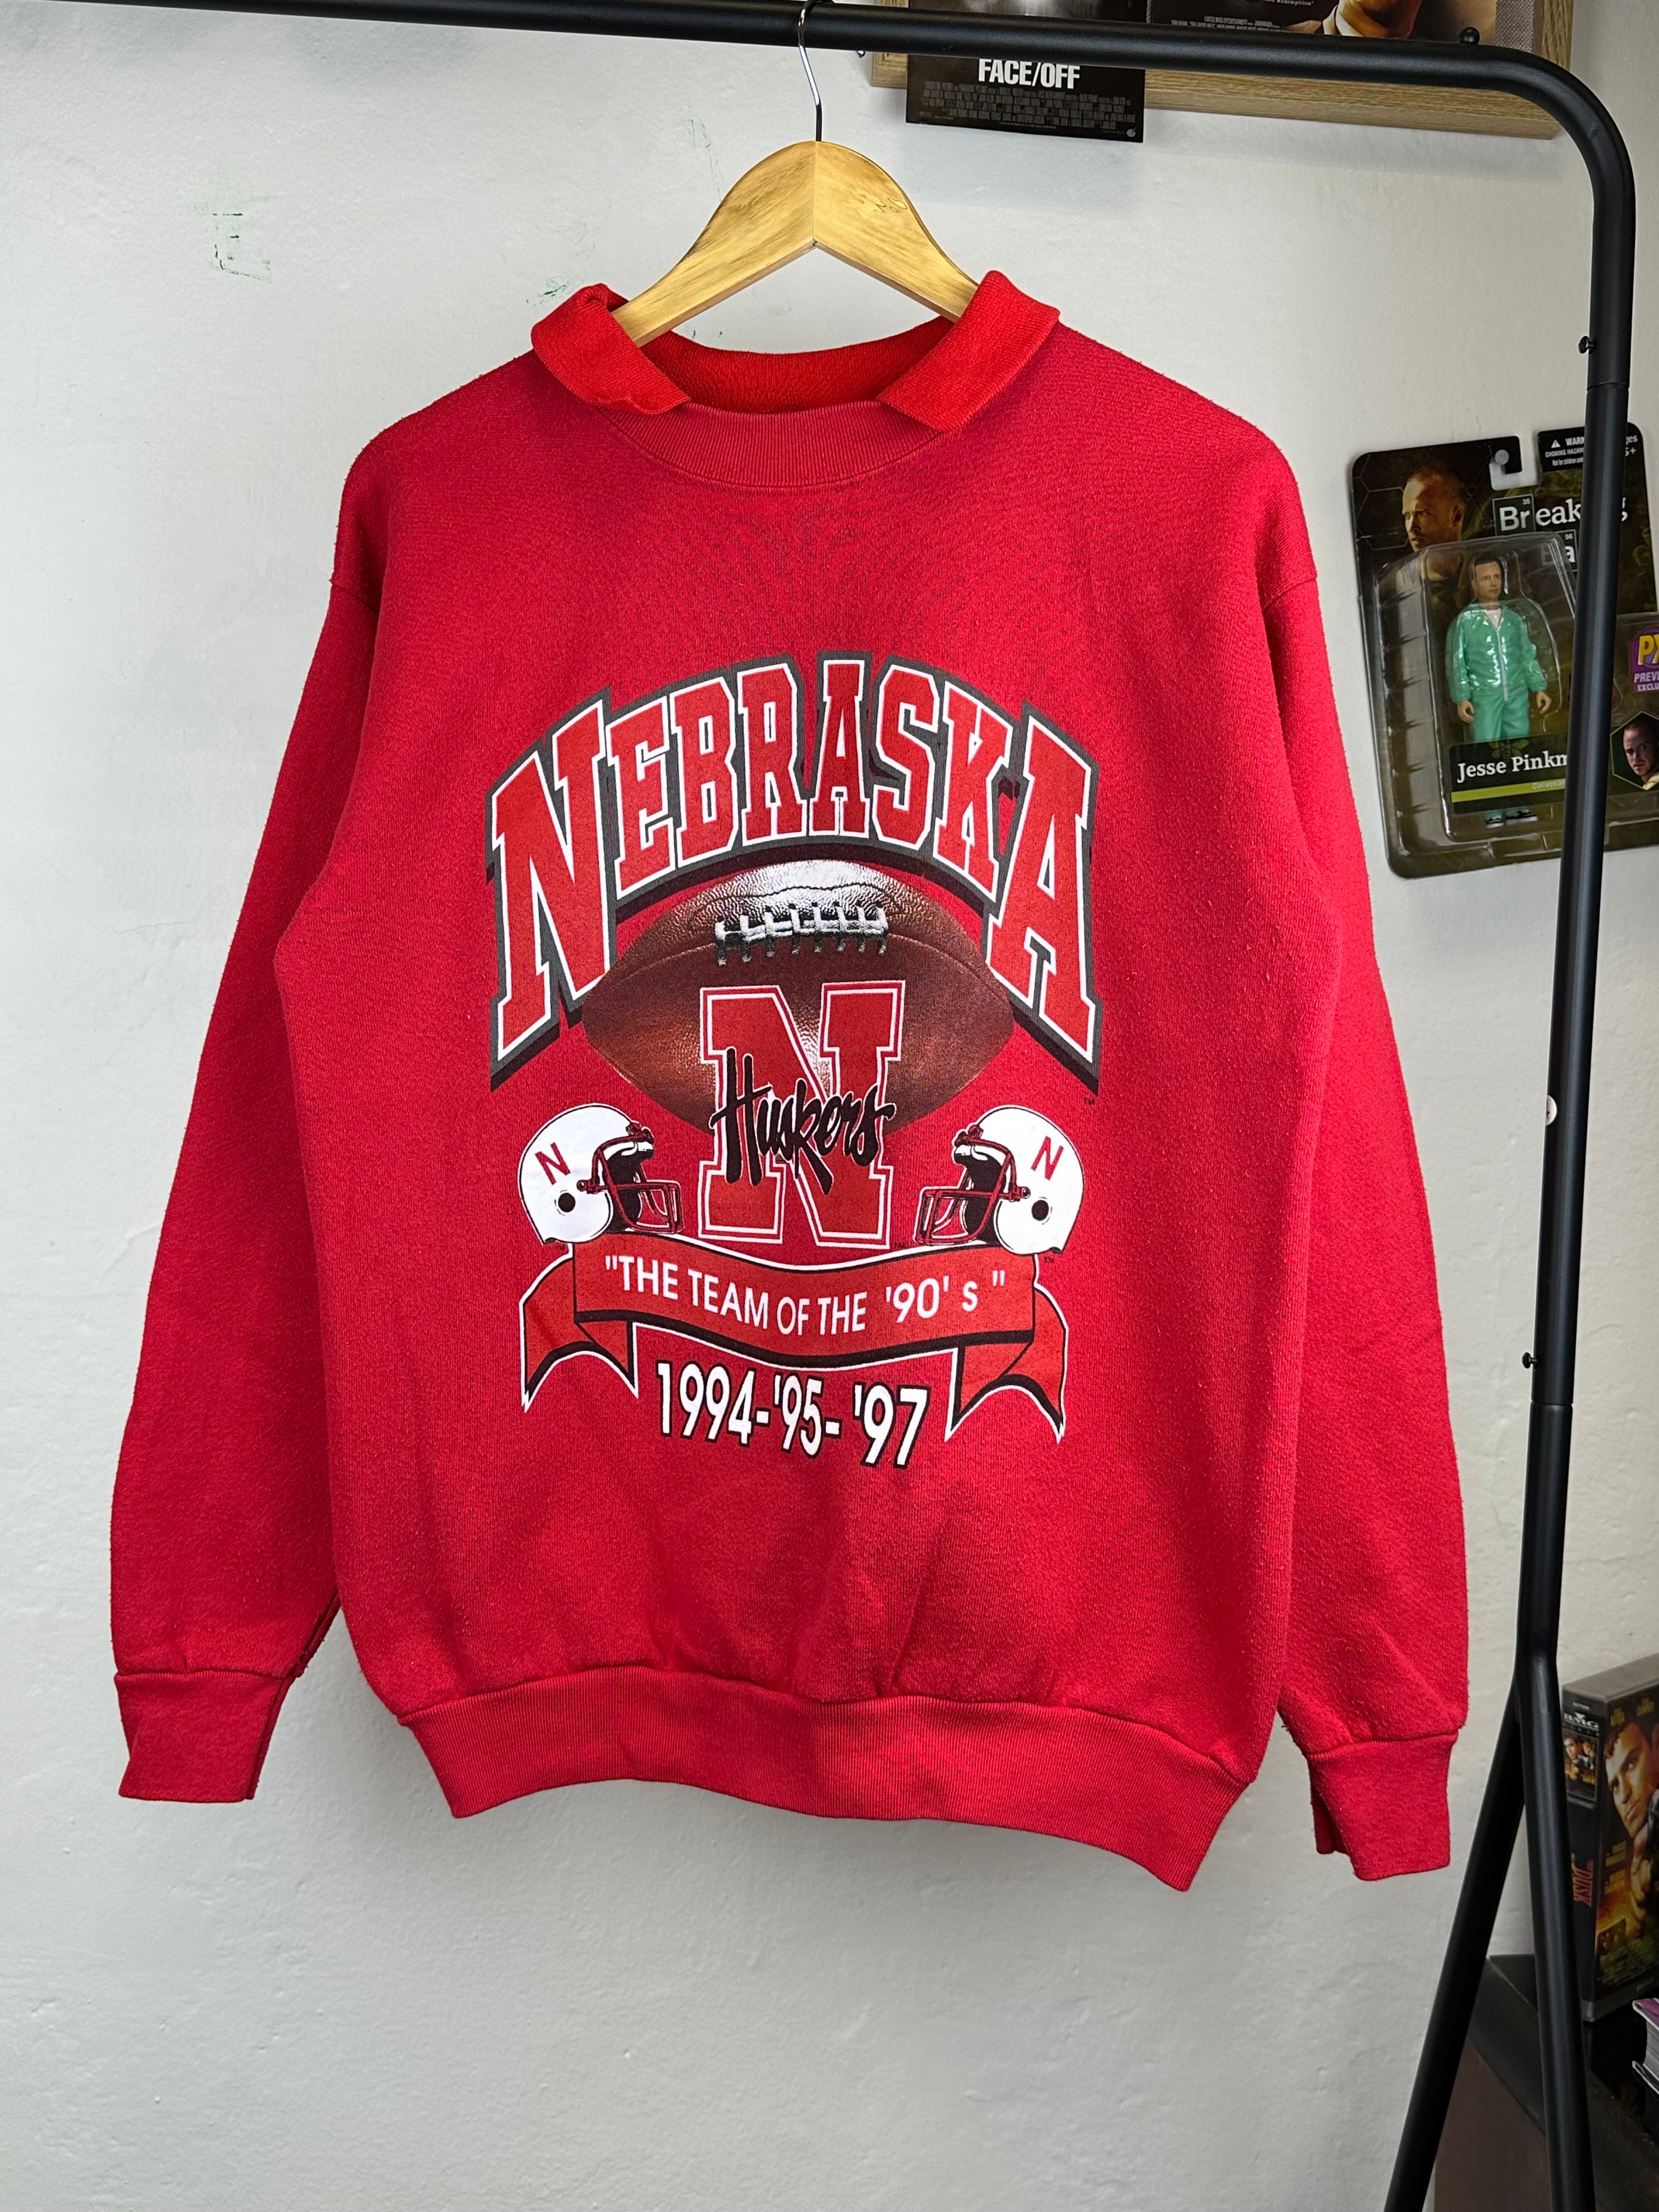 Vintage Nebraska Huskers 90s crewneck - size M